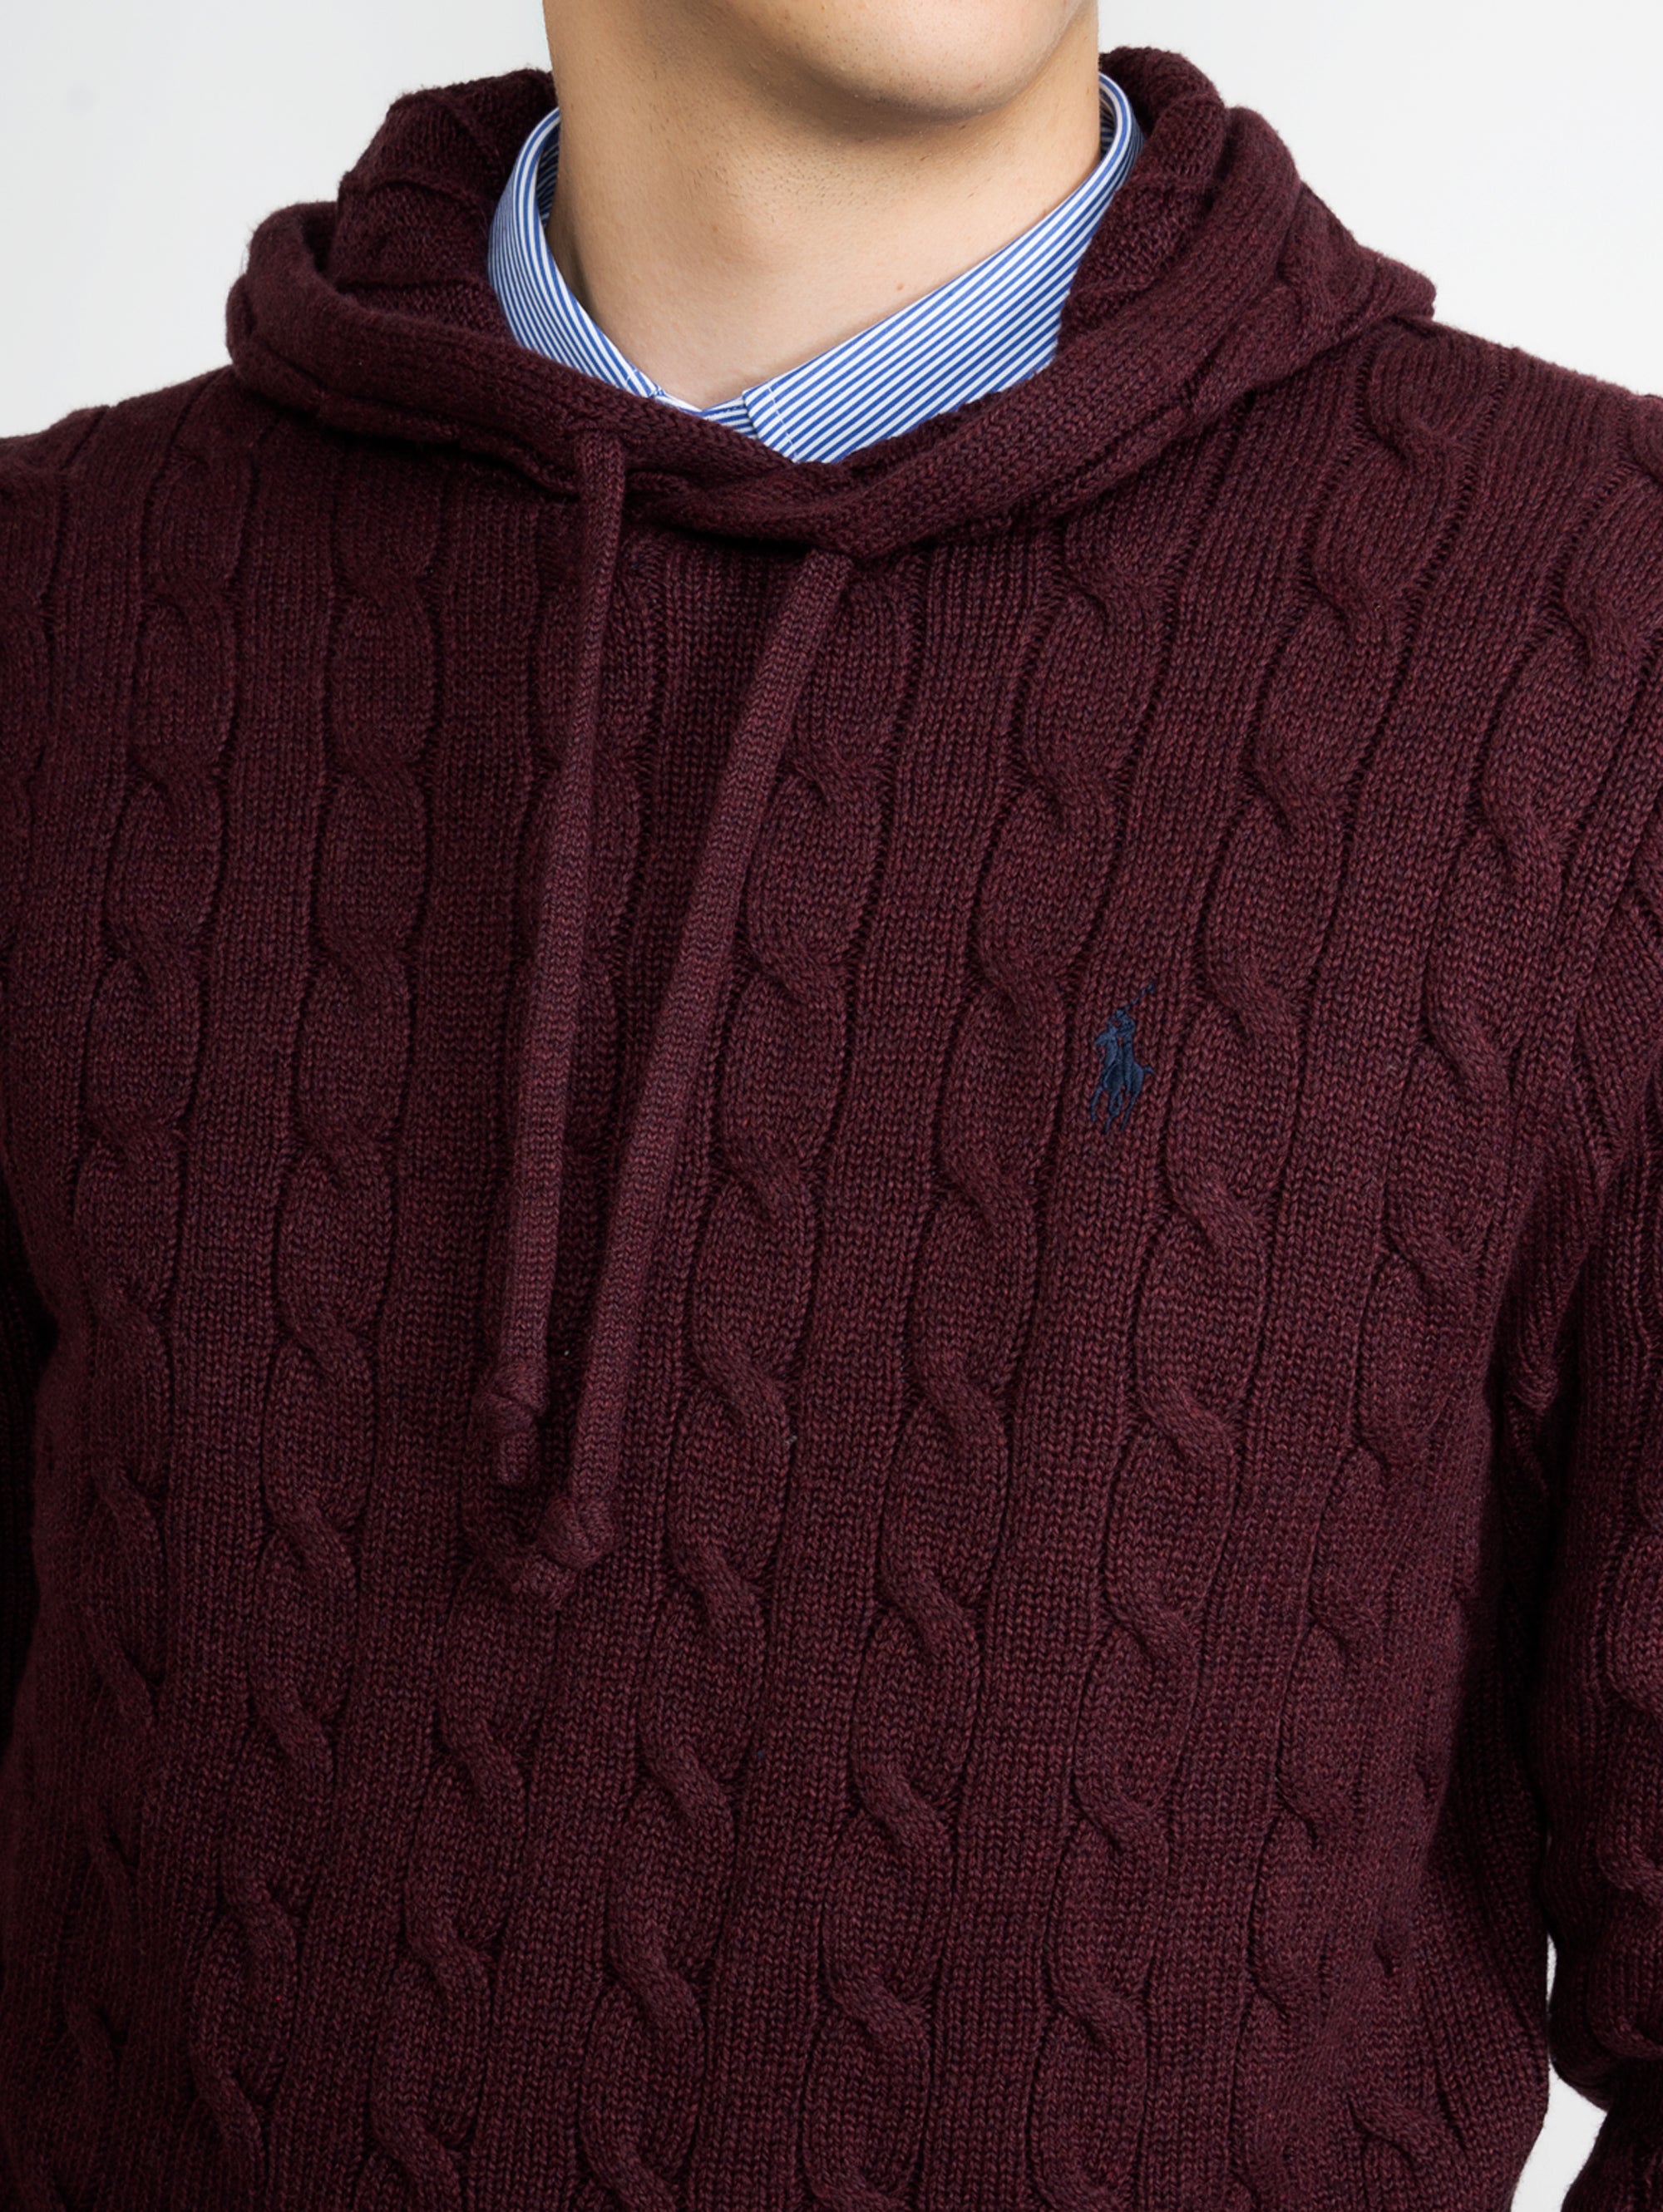 Braided Hooded Sweater Burgundy